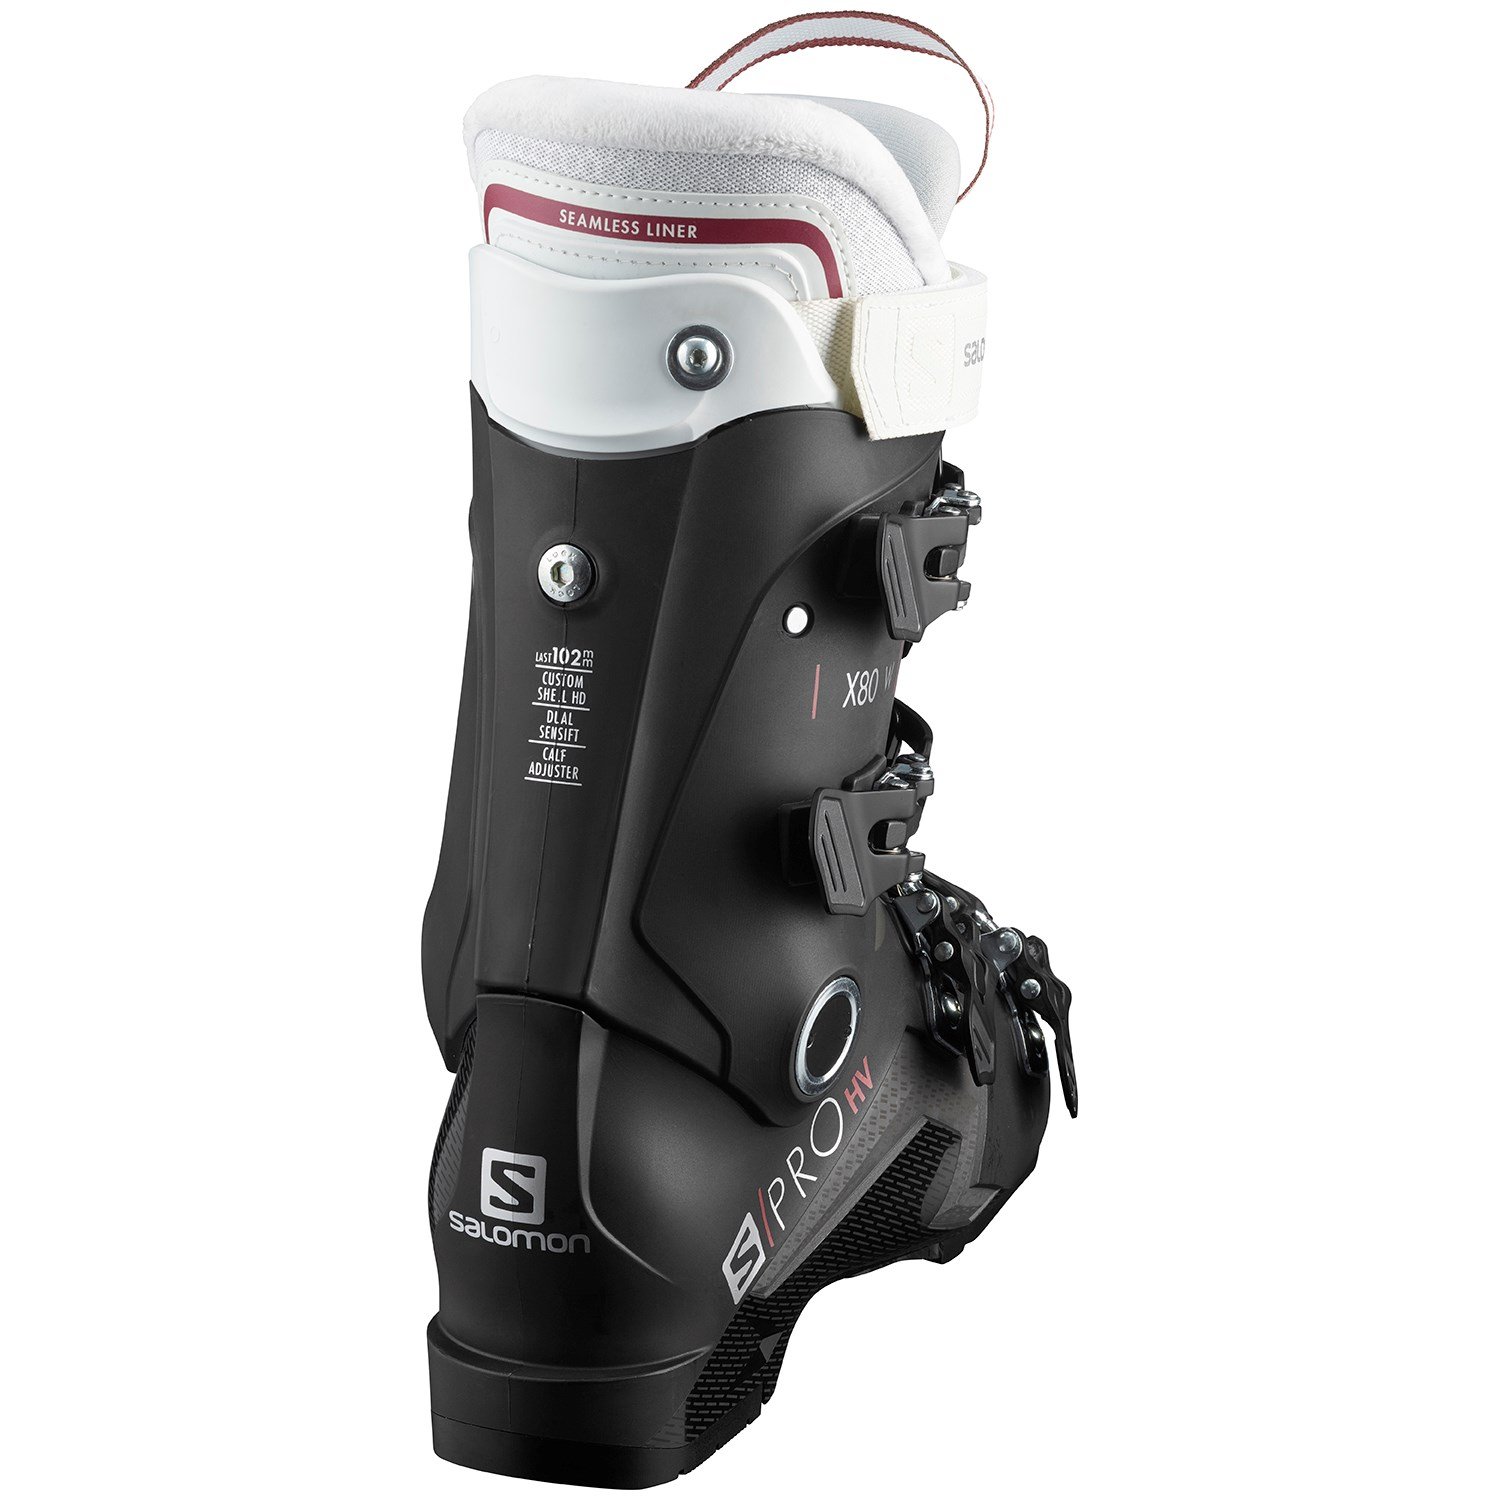 Salomon S/Pro X80 W GW Boots - Women's 2022 | evo